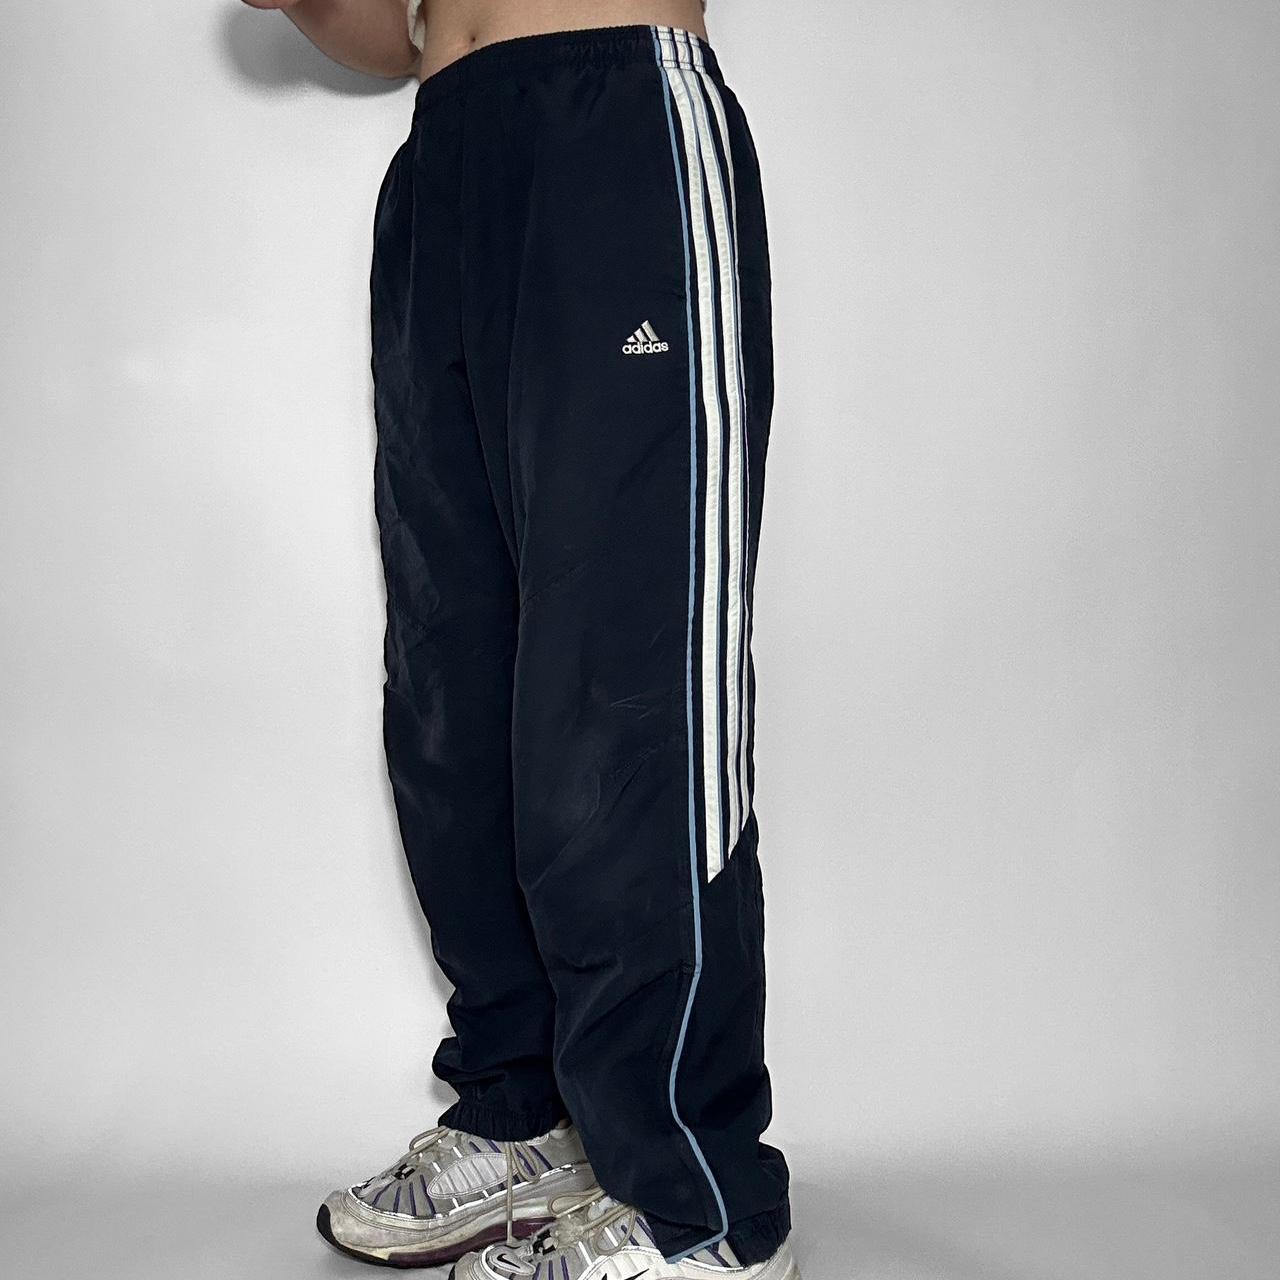 Adidas Adizero Light makes fast Track Pant's Size XL track and Field  men | eBay